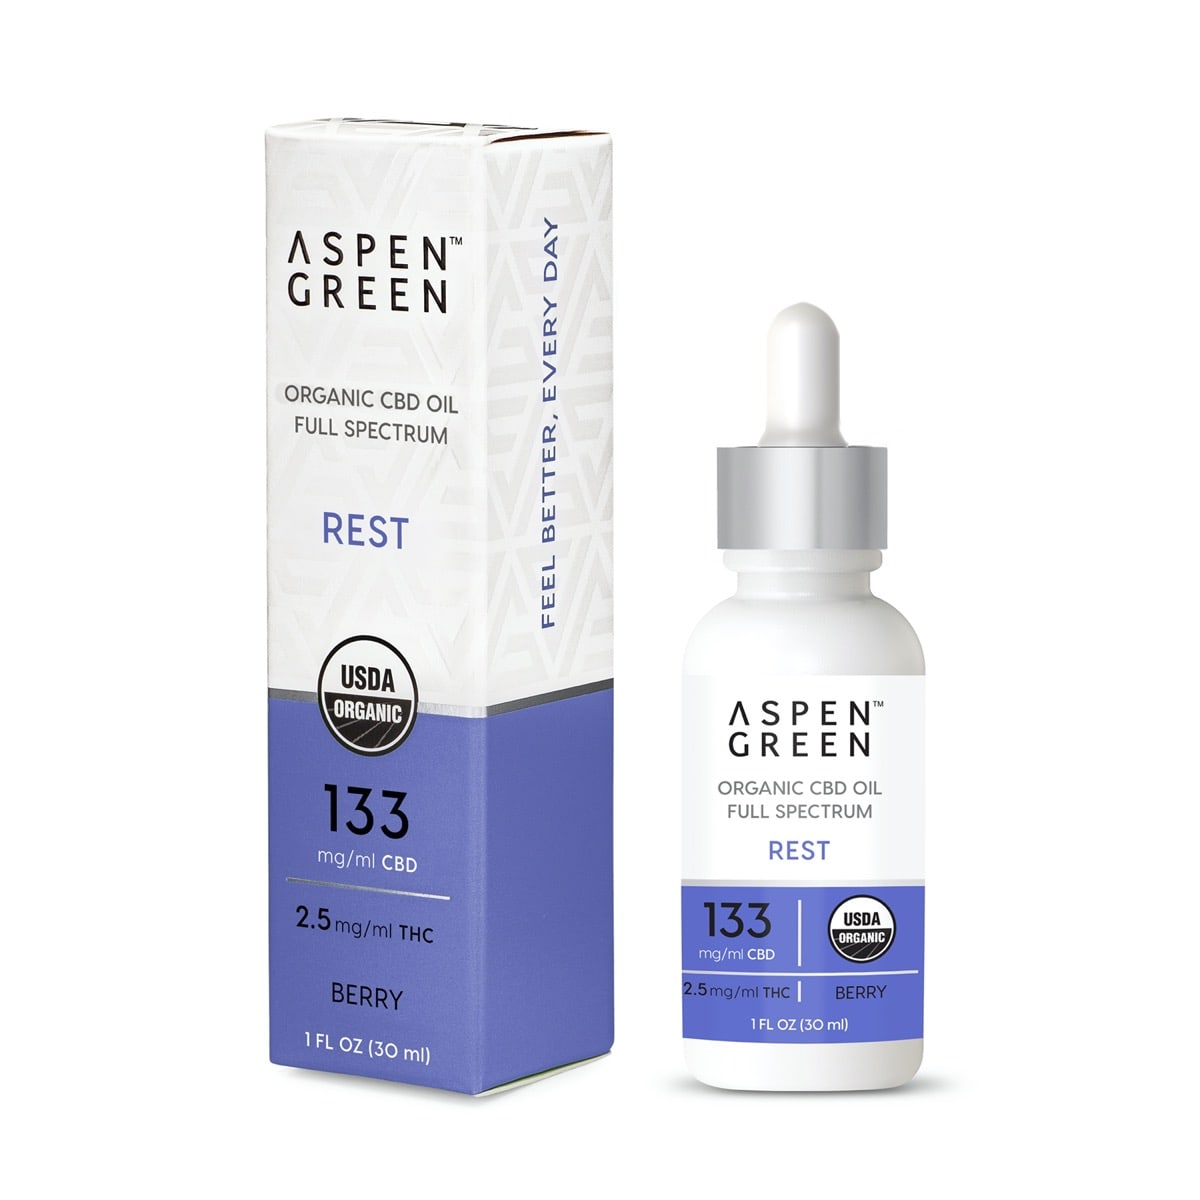 Aspen Green Rest Berry Organic CBD Oil